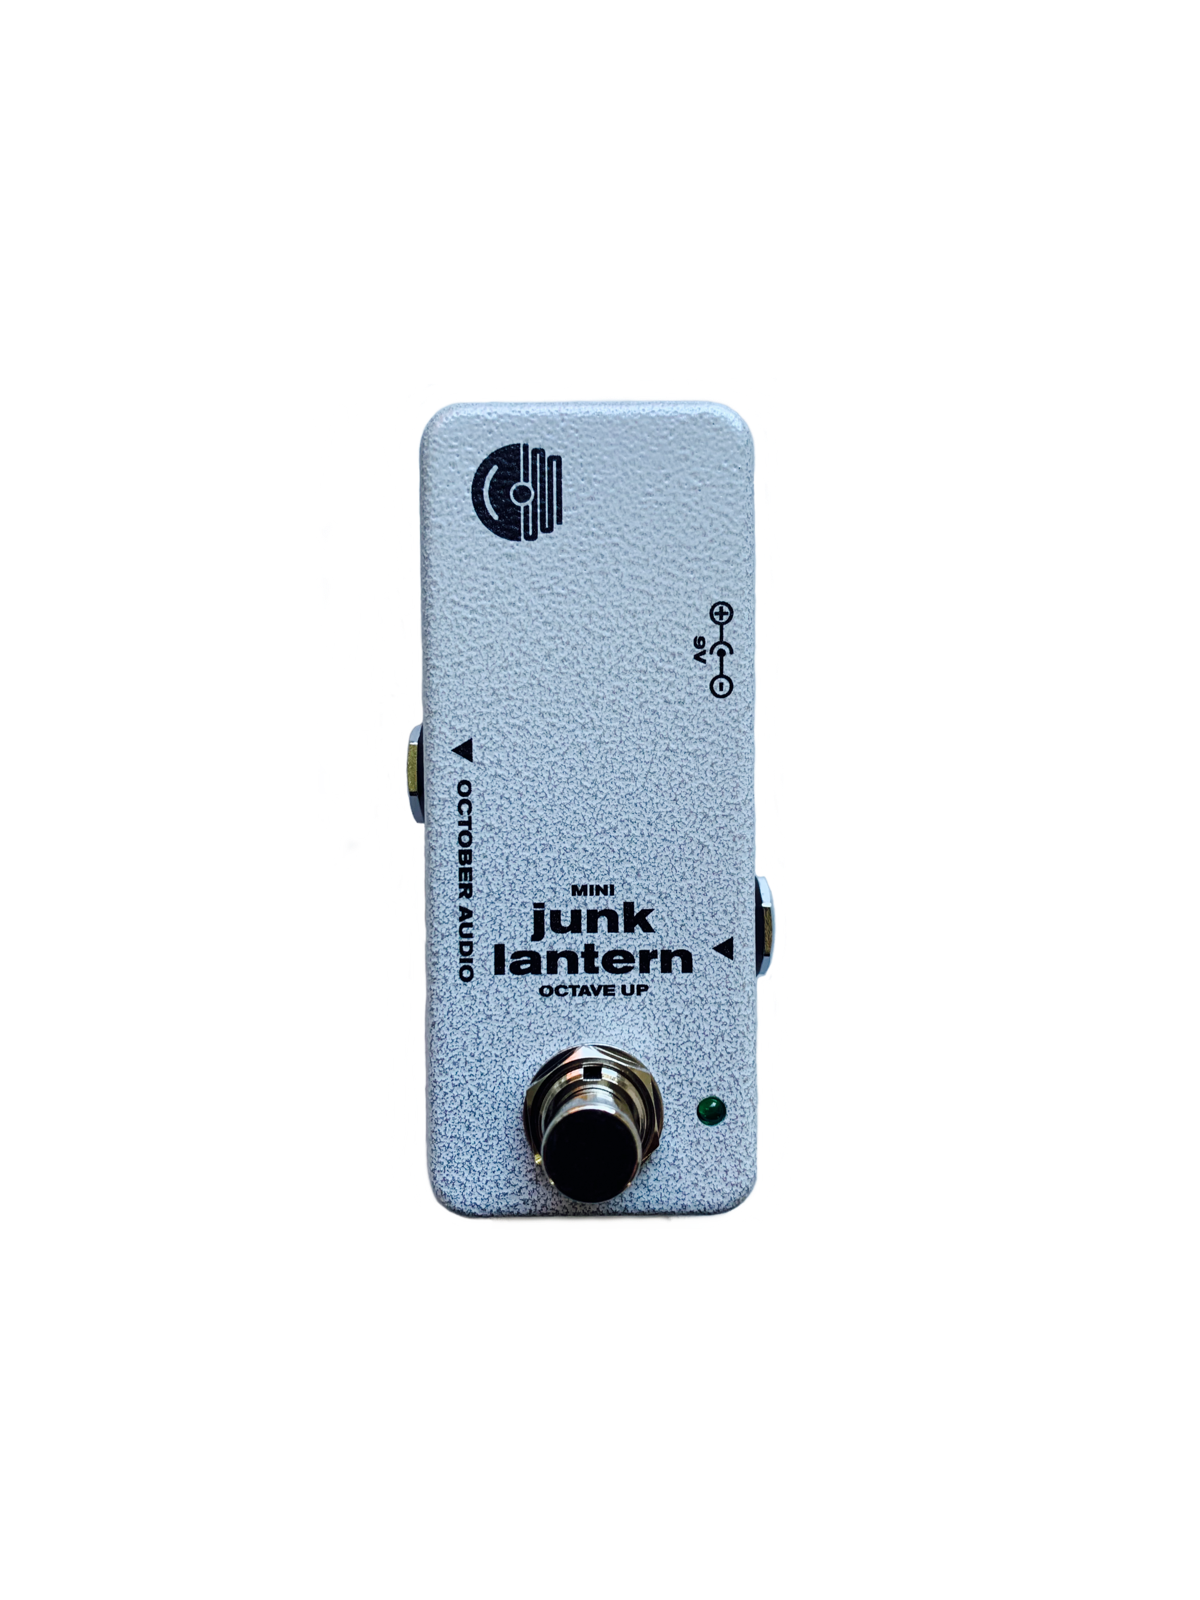 mini Junk Lantern- octave up